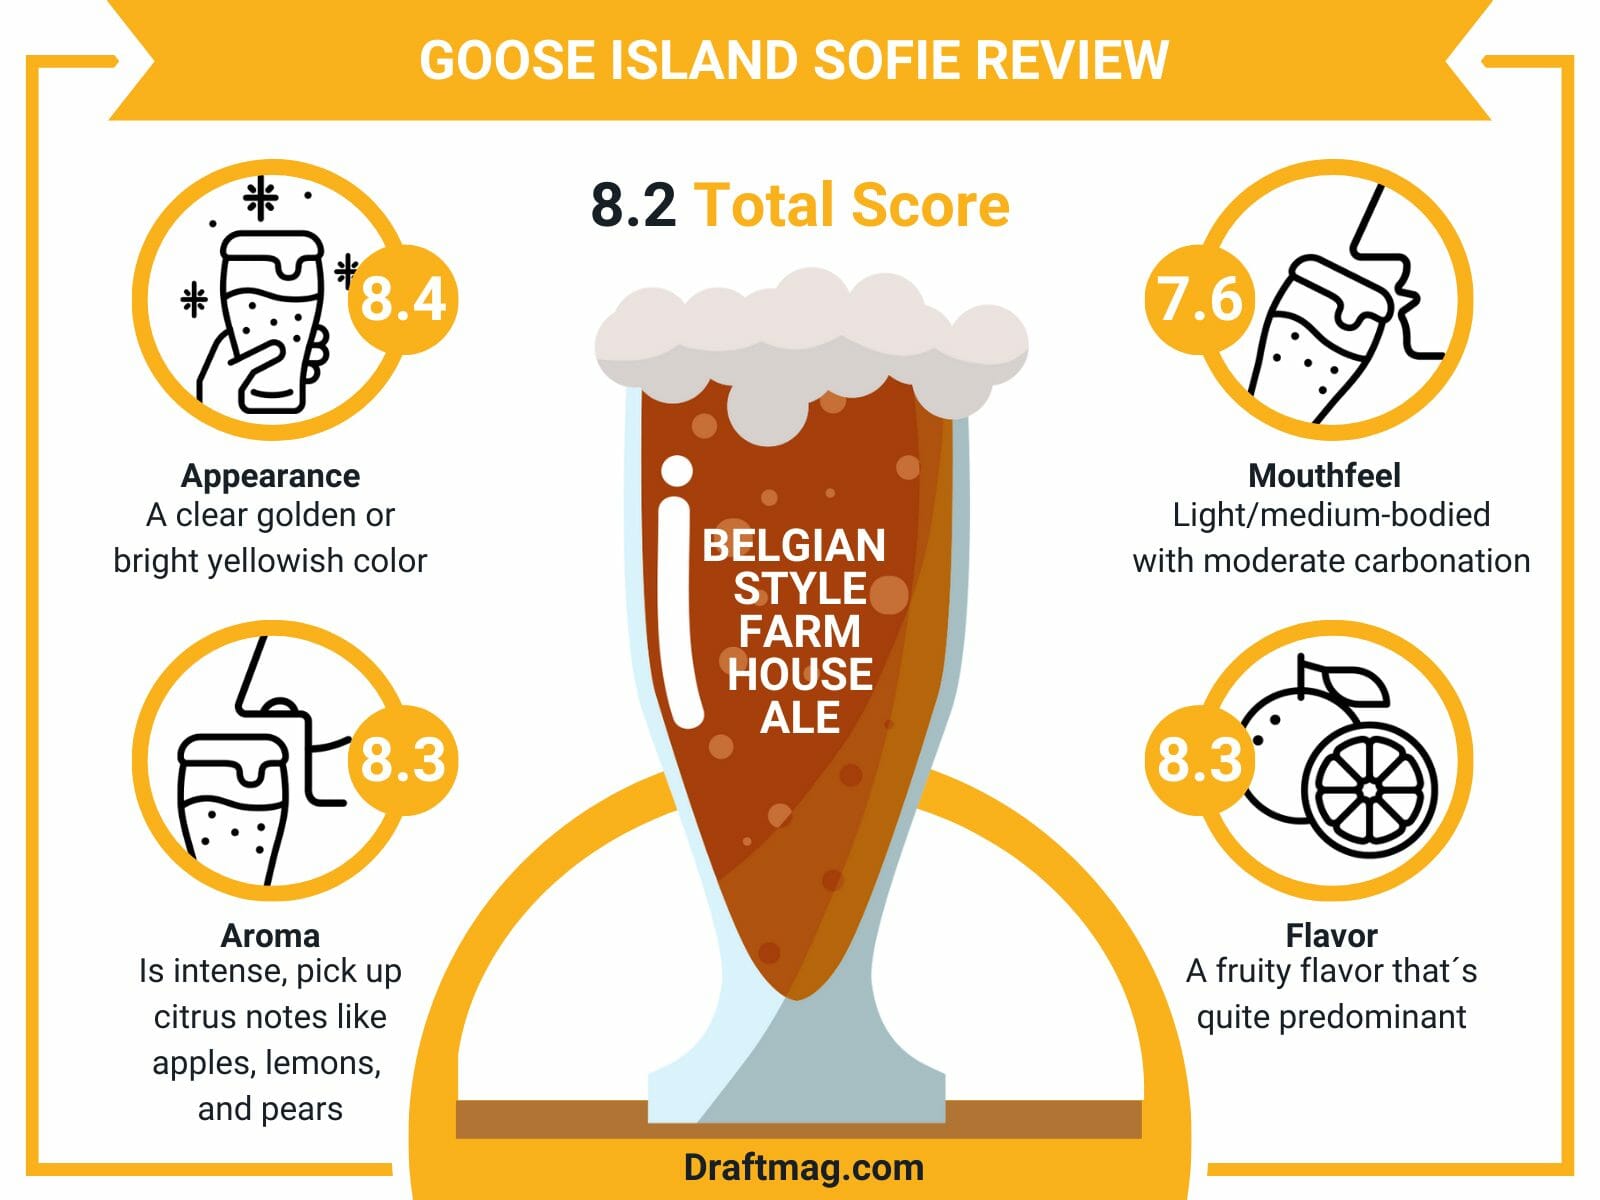 Goose island sofie review infographic